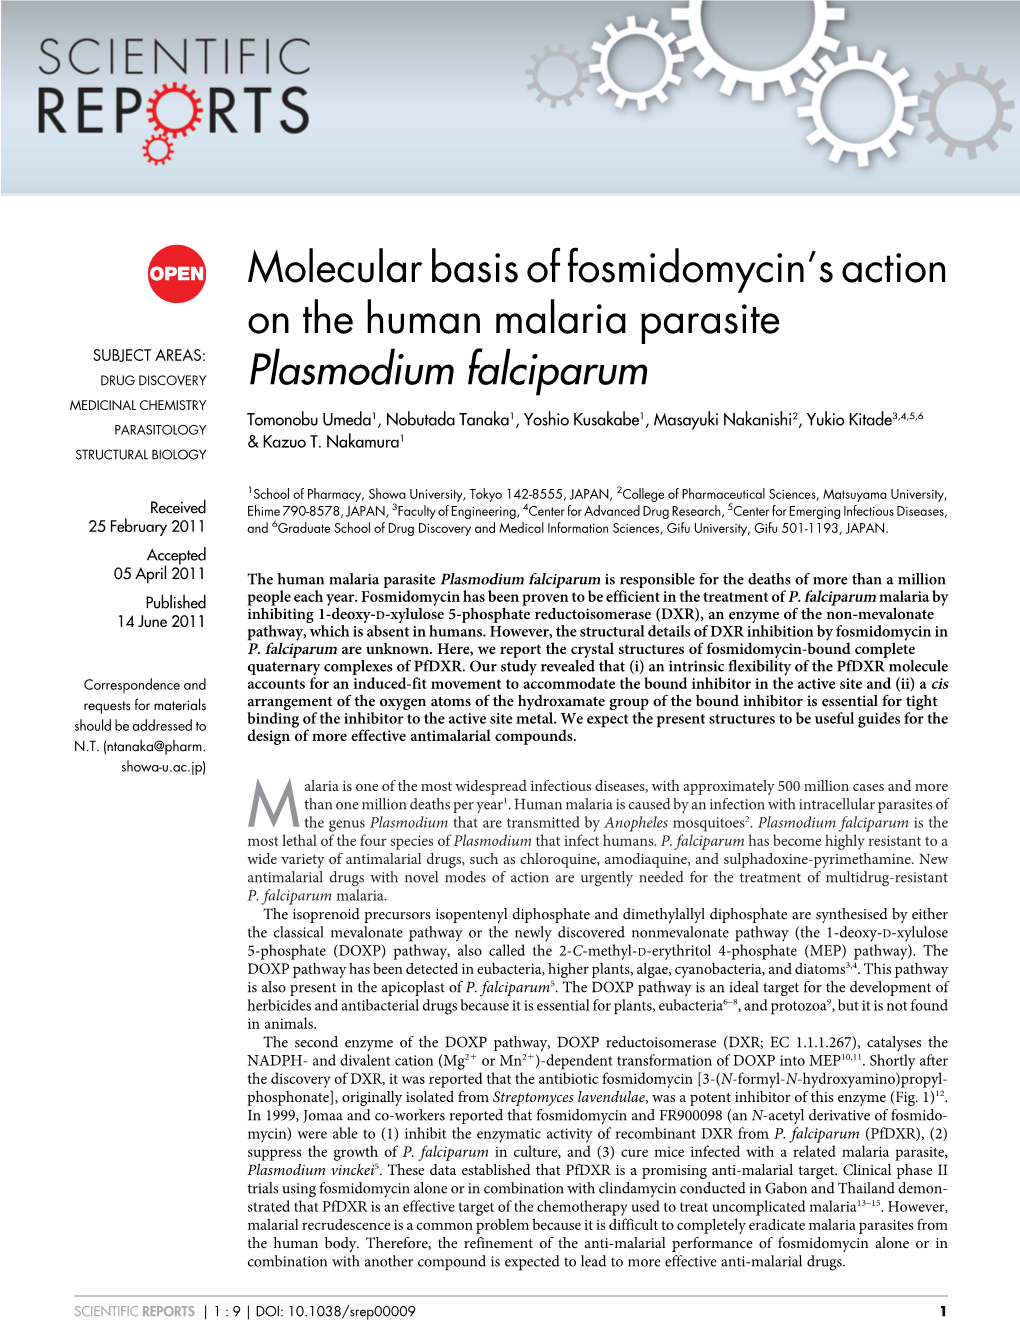 Molecular Basis of Fosmidomycin's Action on the Human Malaria